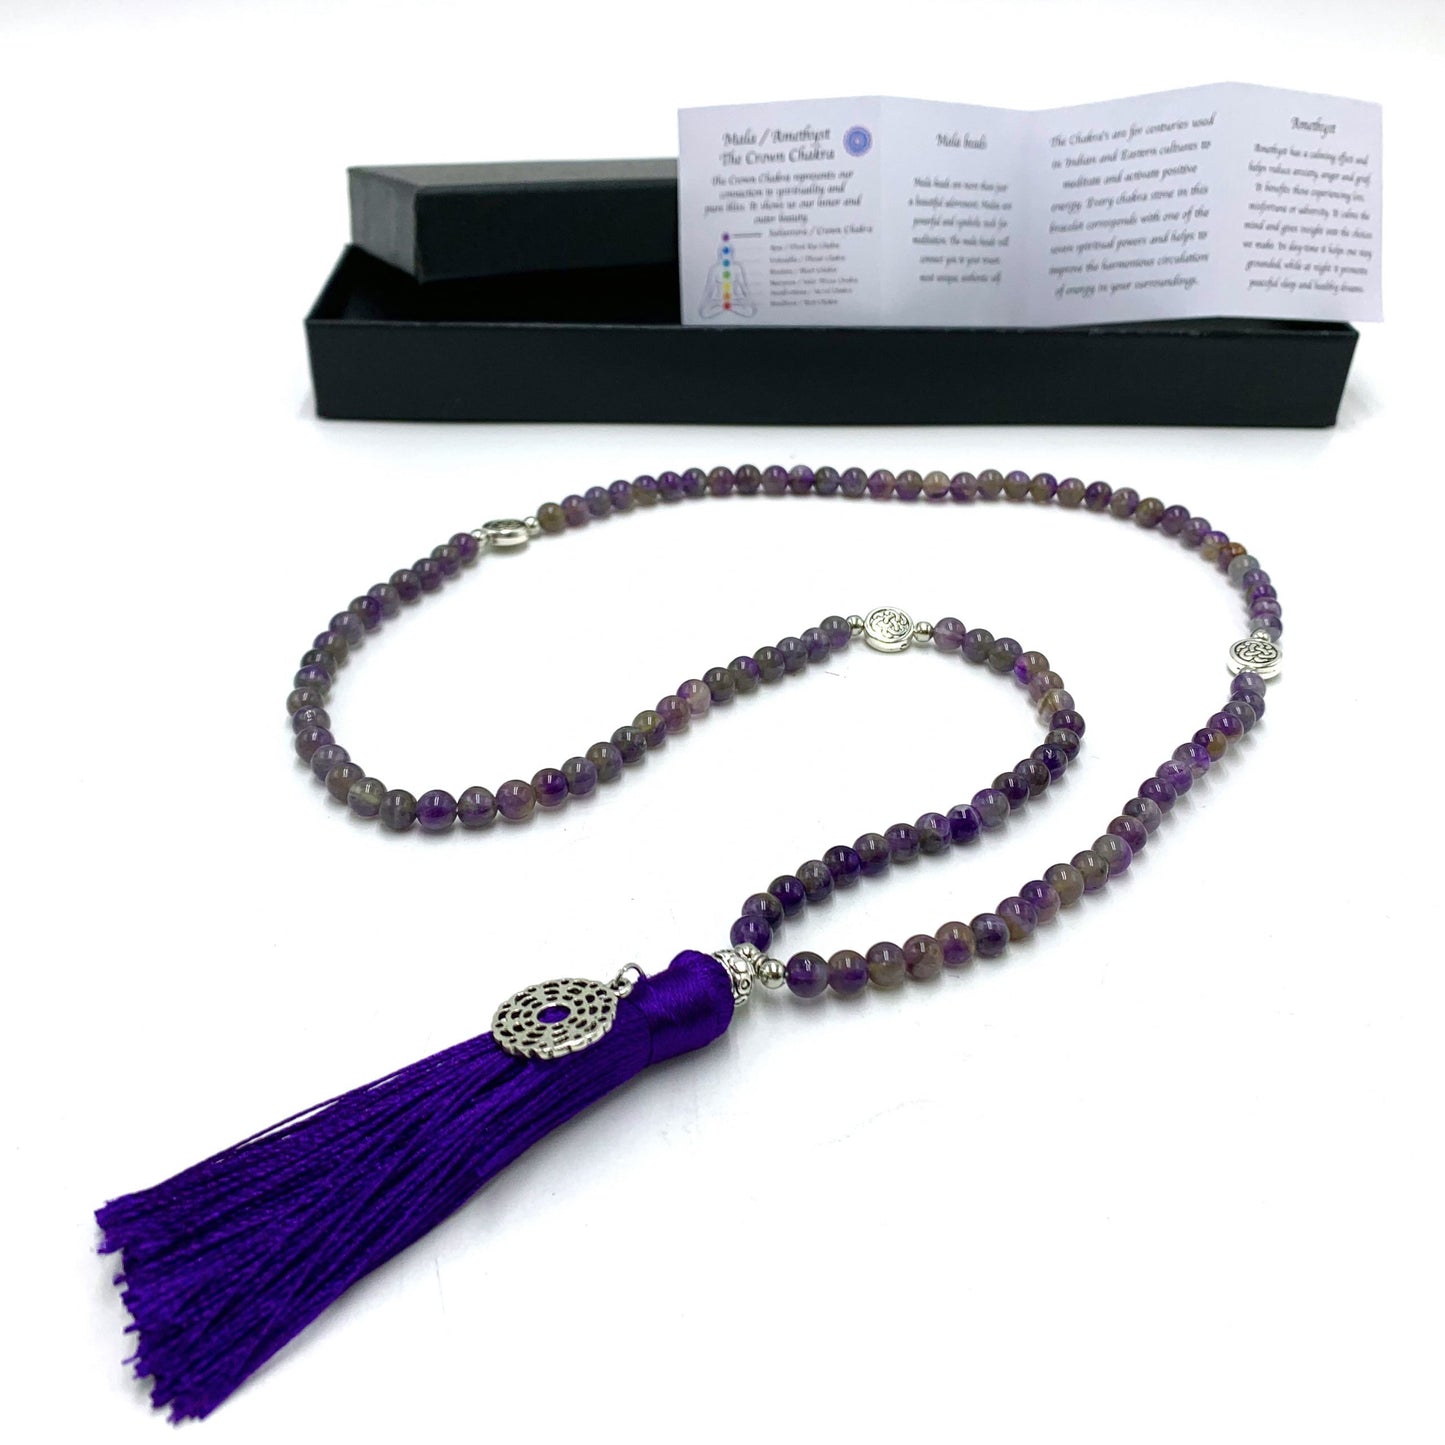 Mala Beads with Tassel Chakra Charm